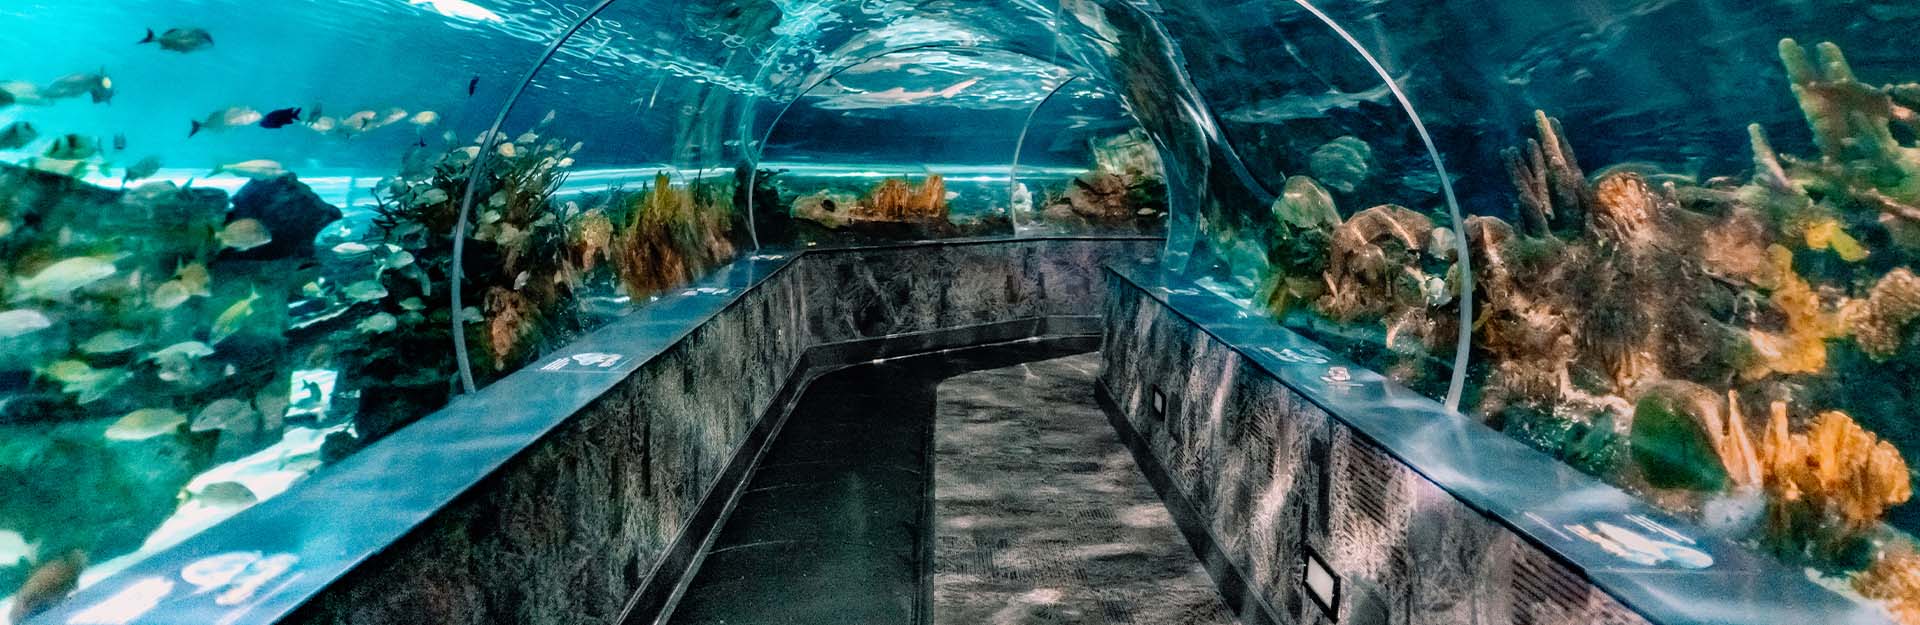 Ripley's Aquarium of the Smokies - Shark Tunnel